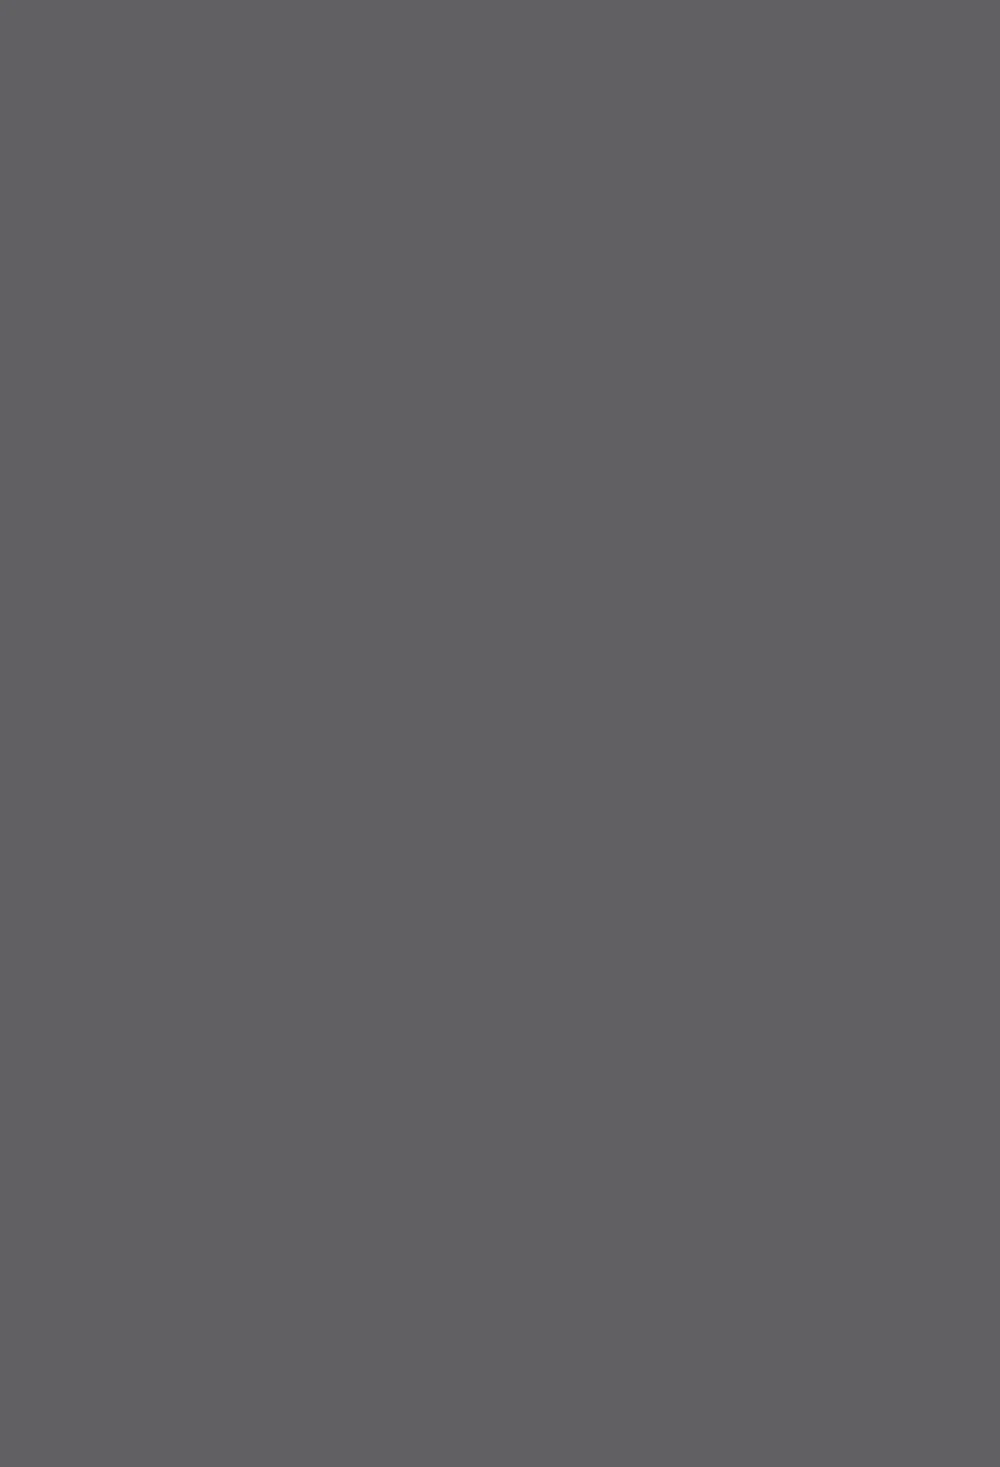 Фон для фотосъемки темно-серый однотонный серый фон для фотосъемки портрет  дома | AliExpress